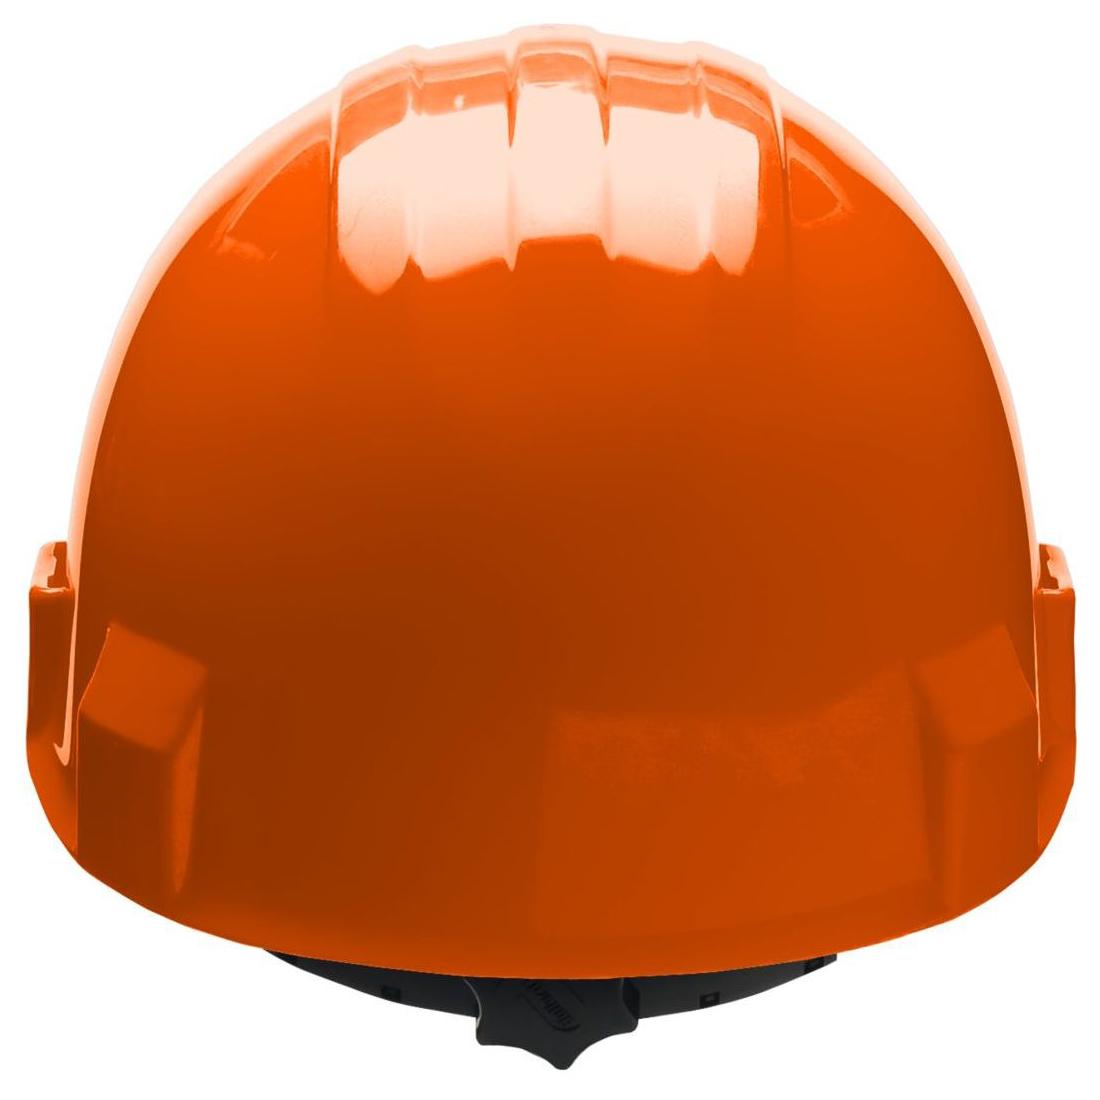 Bullard VTORR Type II Vector Helmet Hard Hat One Size Orange 4 Point Ratchet Suspension 